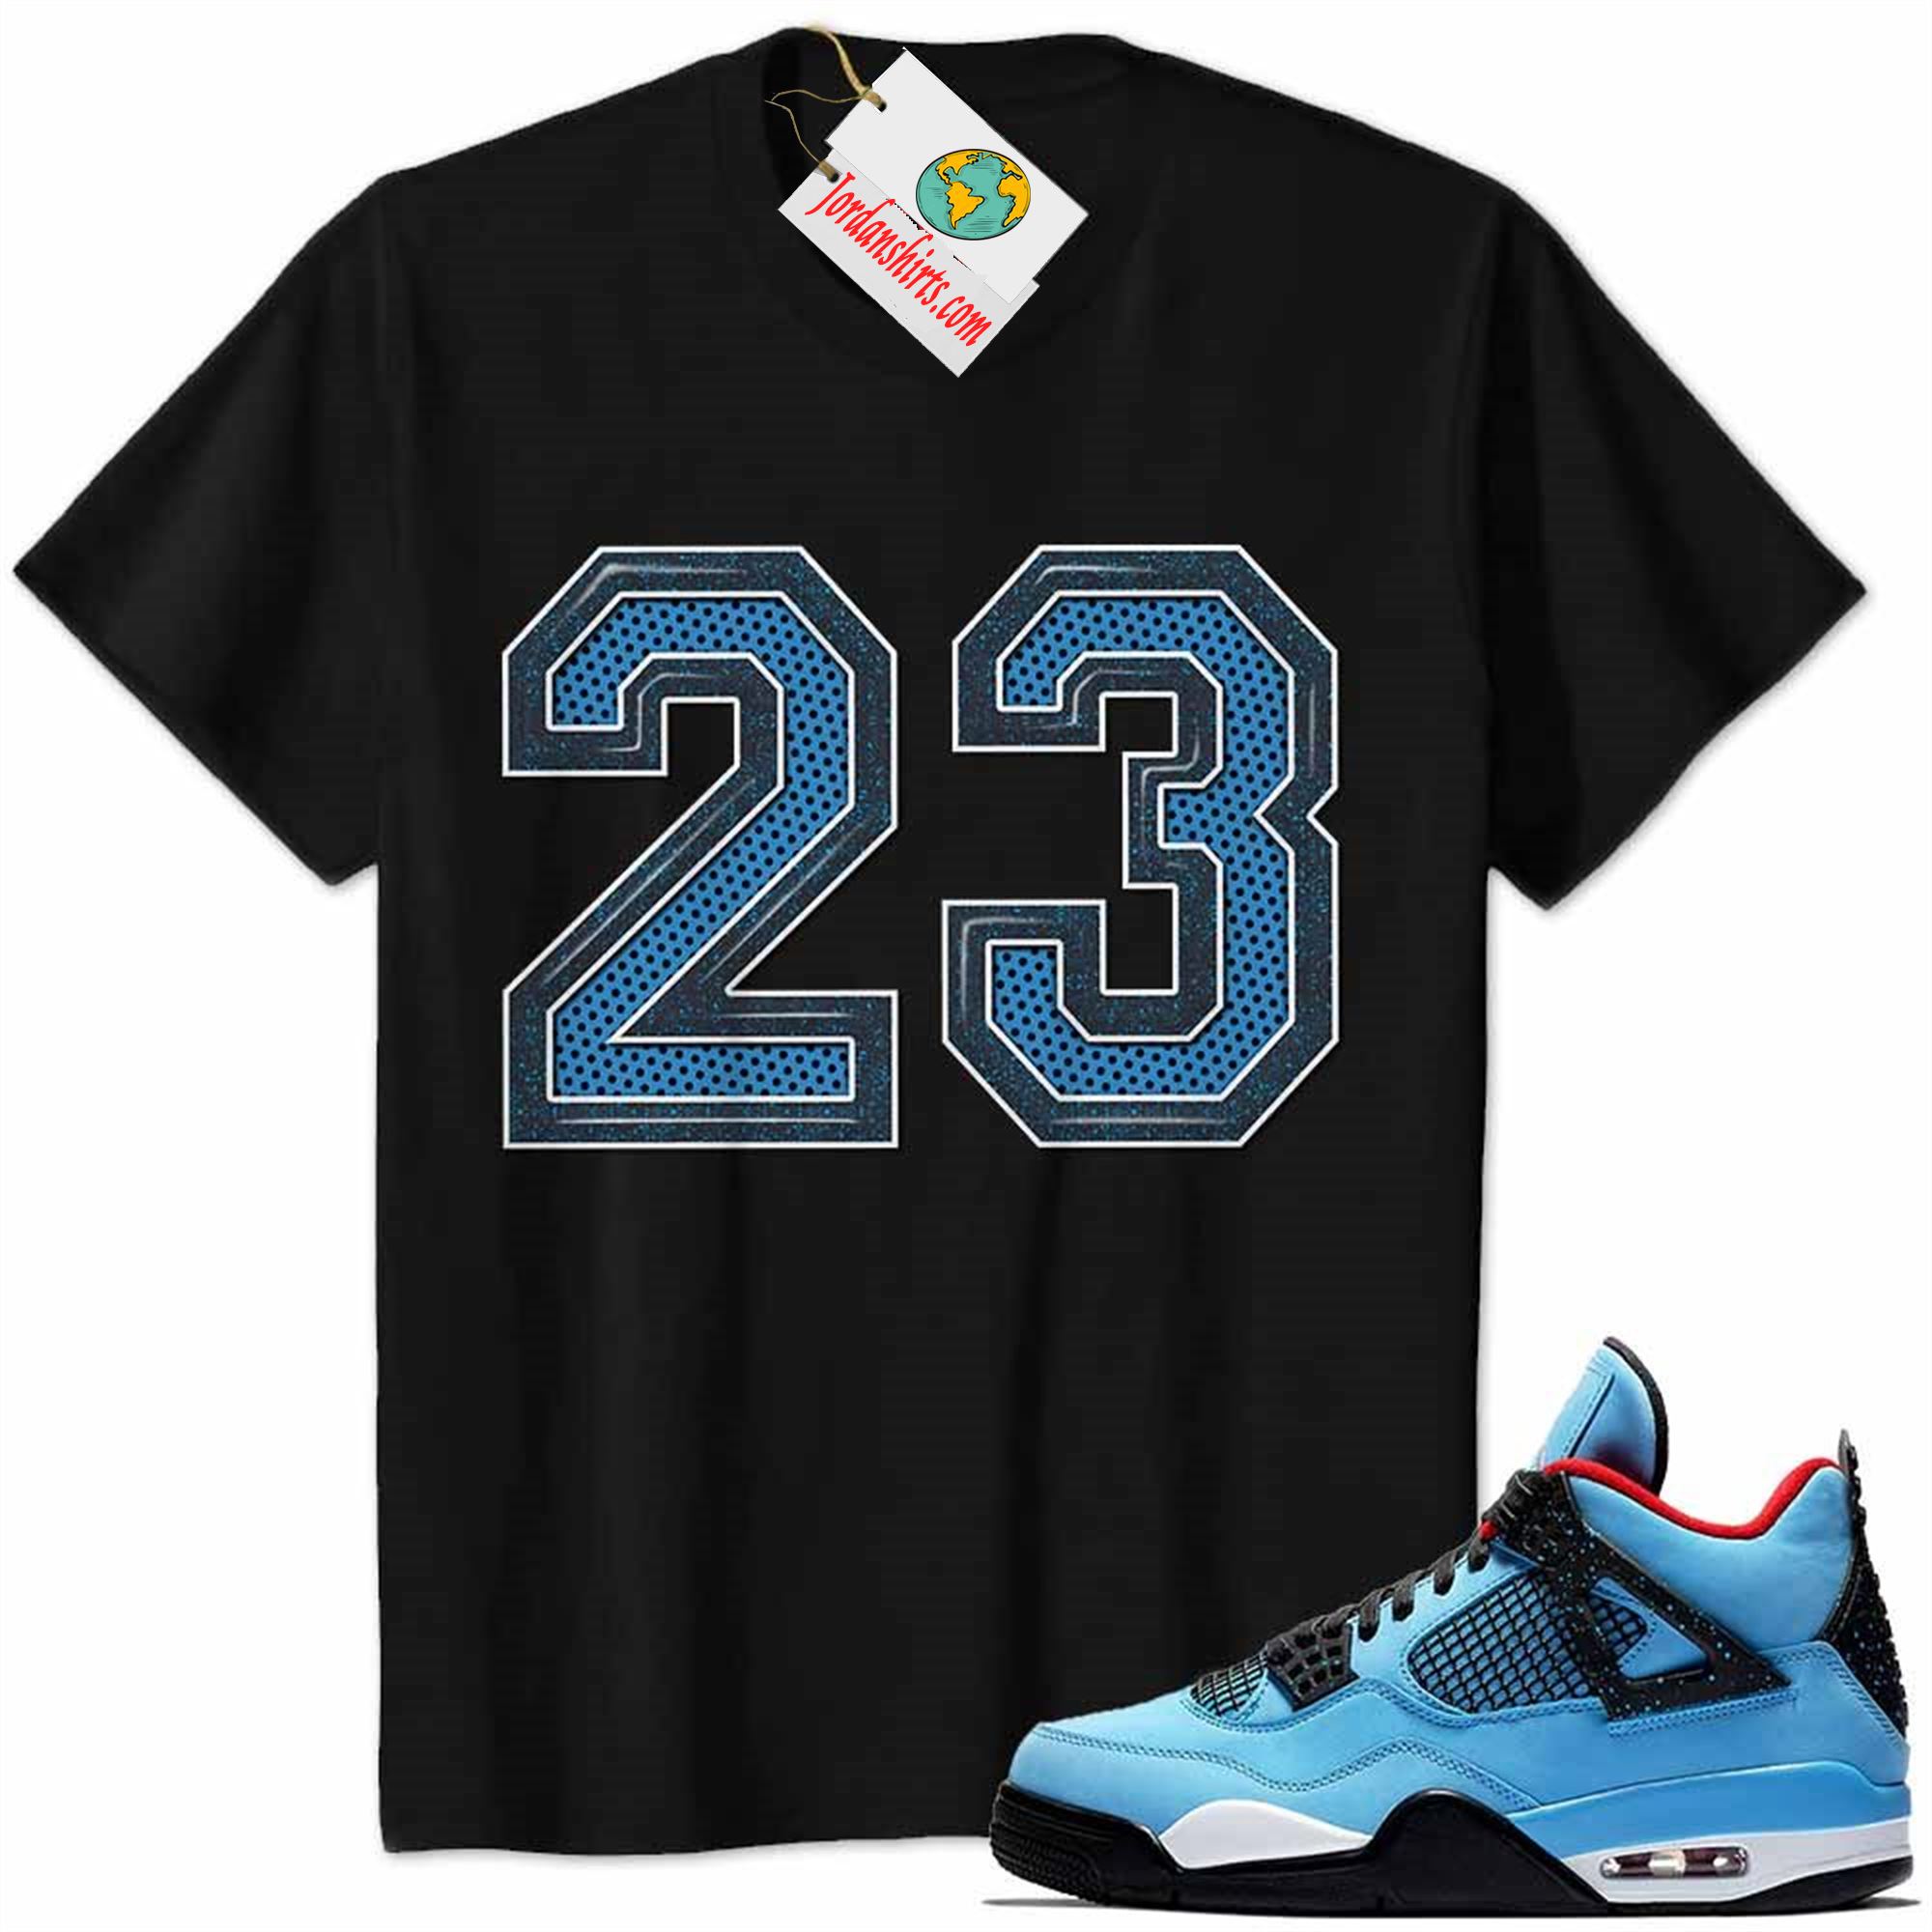 Jordan 4 Shirt, Jordan 4 Cactus Jack Travis Scott Shirt Michael Jordan Number 23 Black Plus Size Up To 5xl